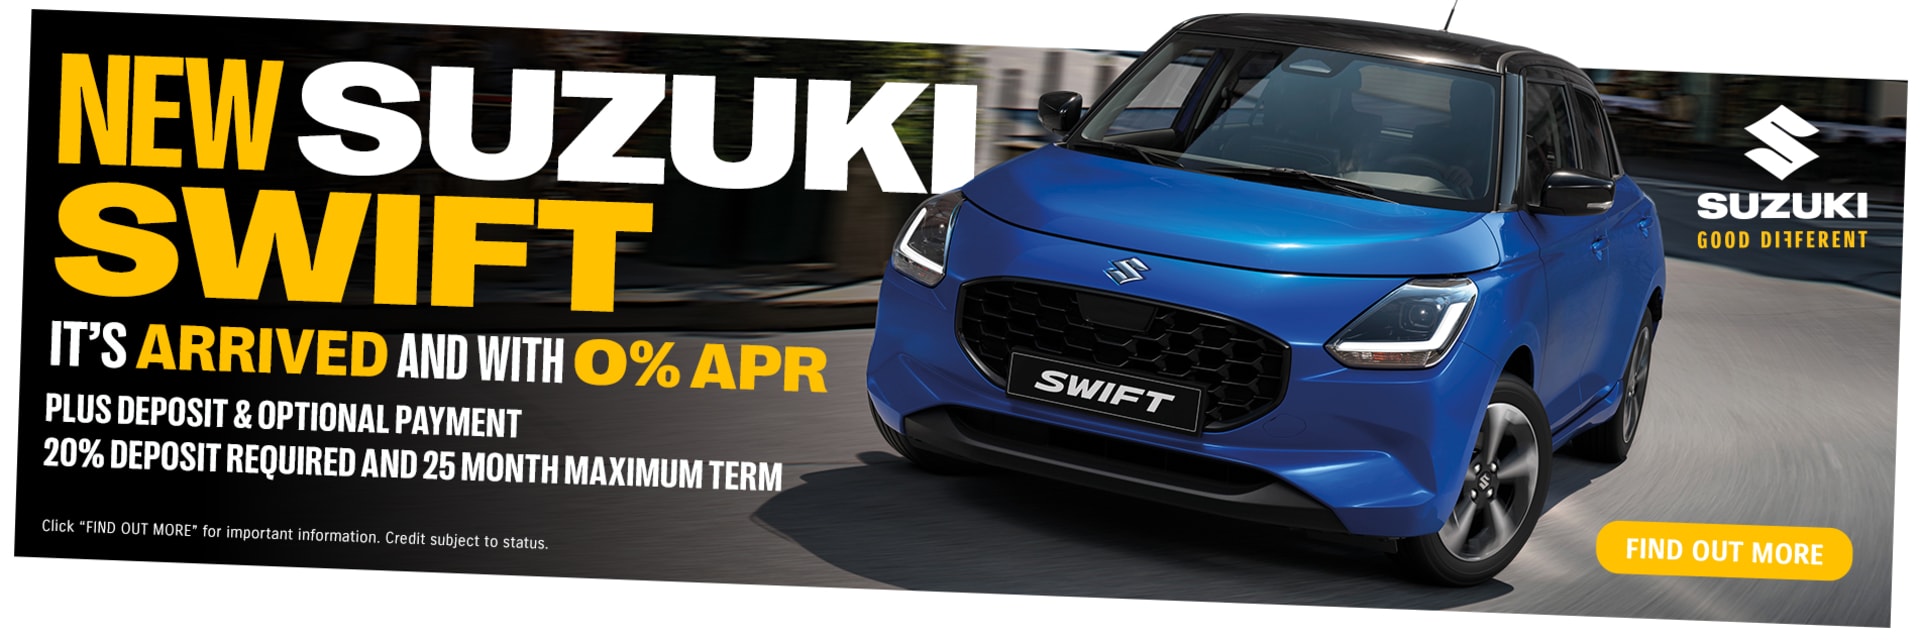 All-New Suzuki Swift